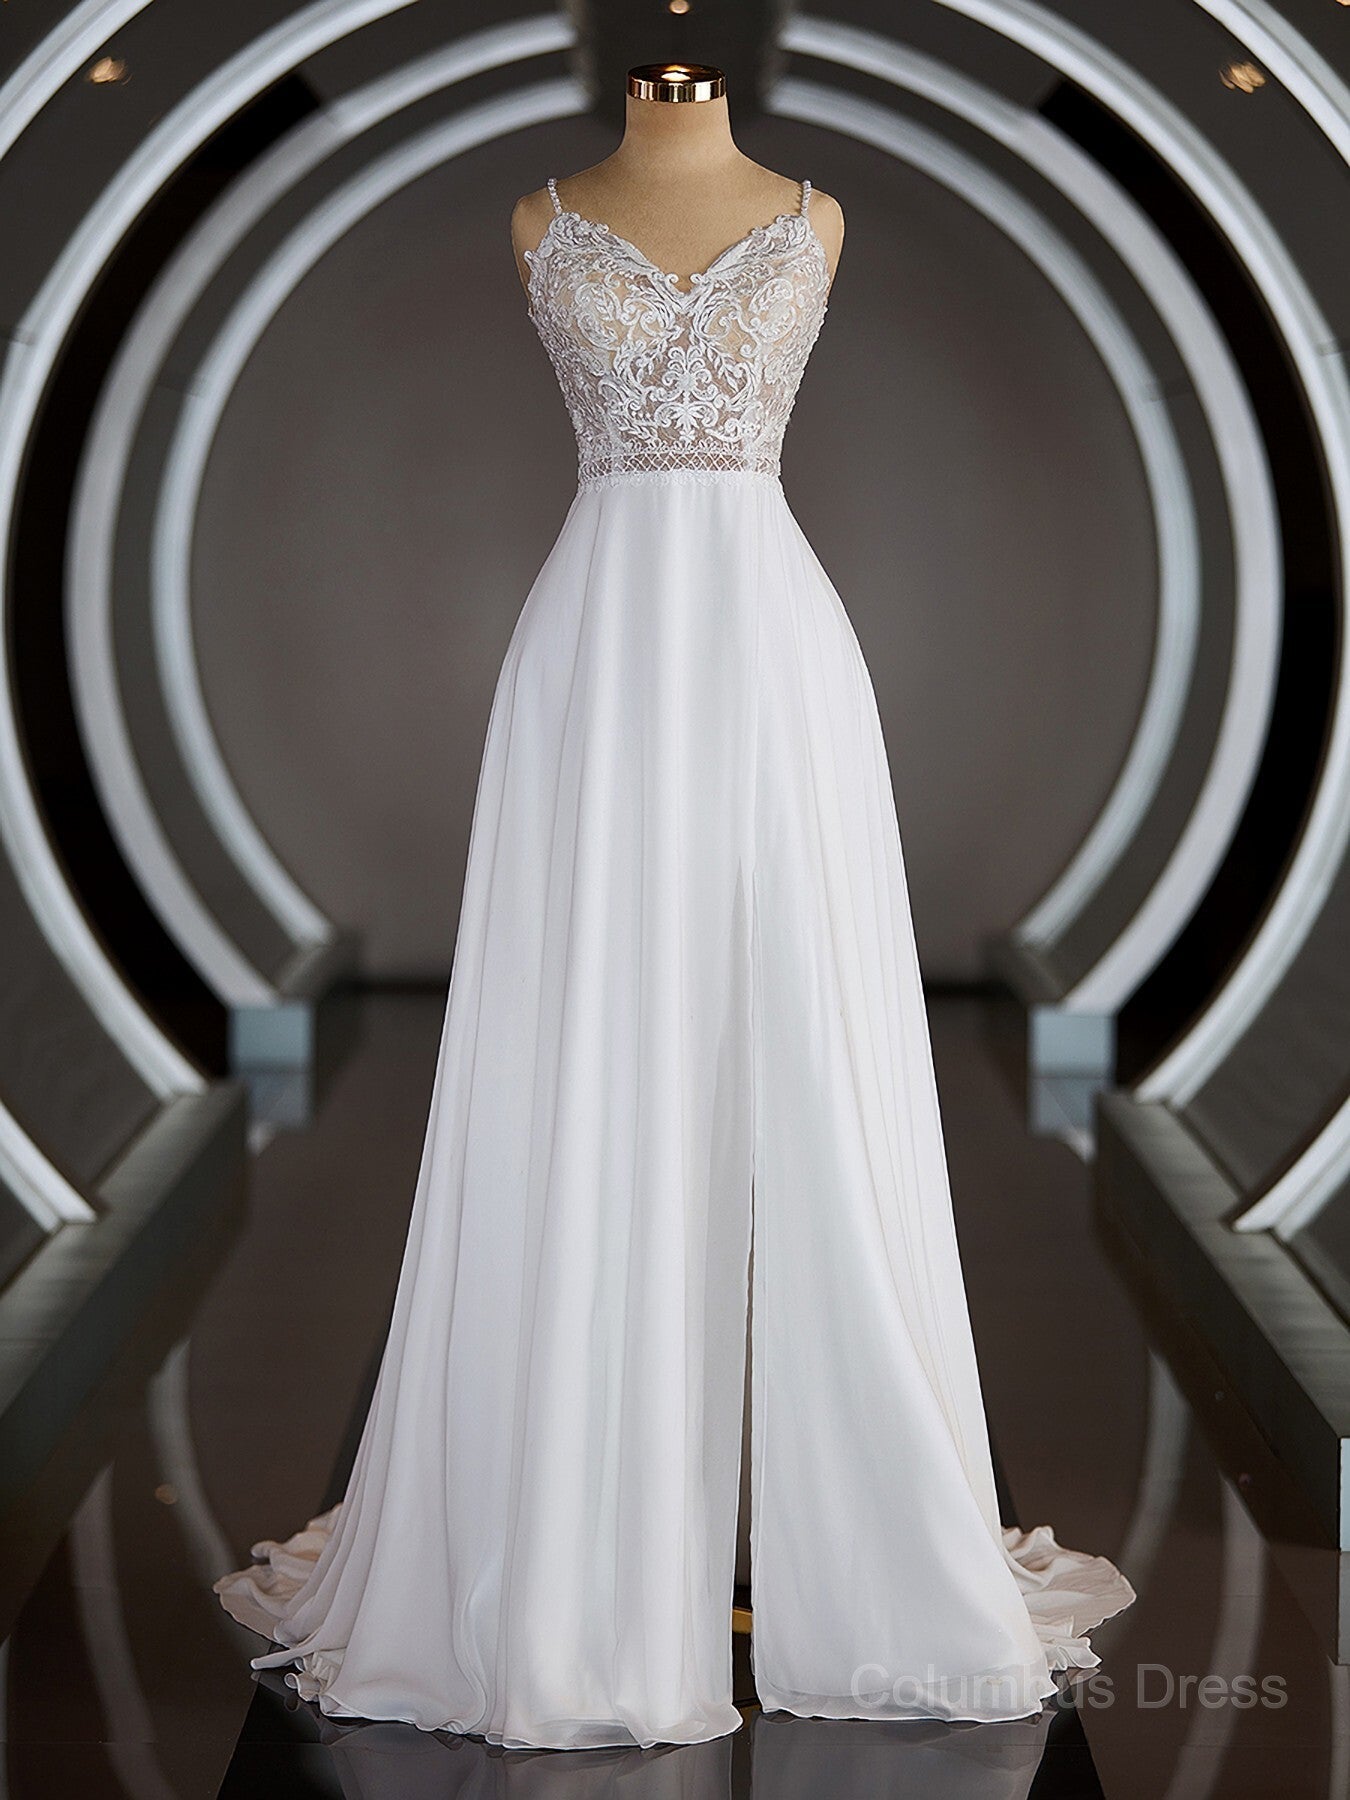 A-Line/Princess V-neck Court Train Chiffon Corset Wedding Dresses with Leg Slit outfit, Wedding Dress On A Budget